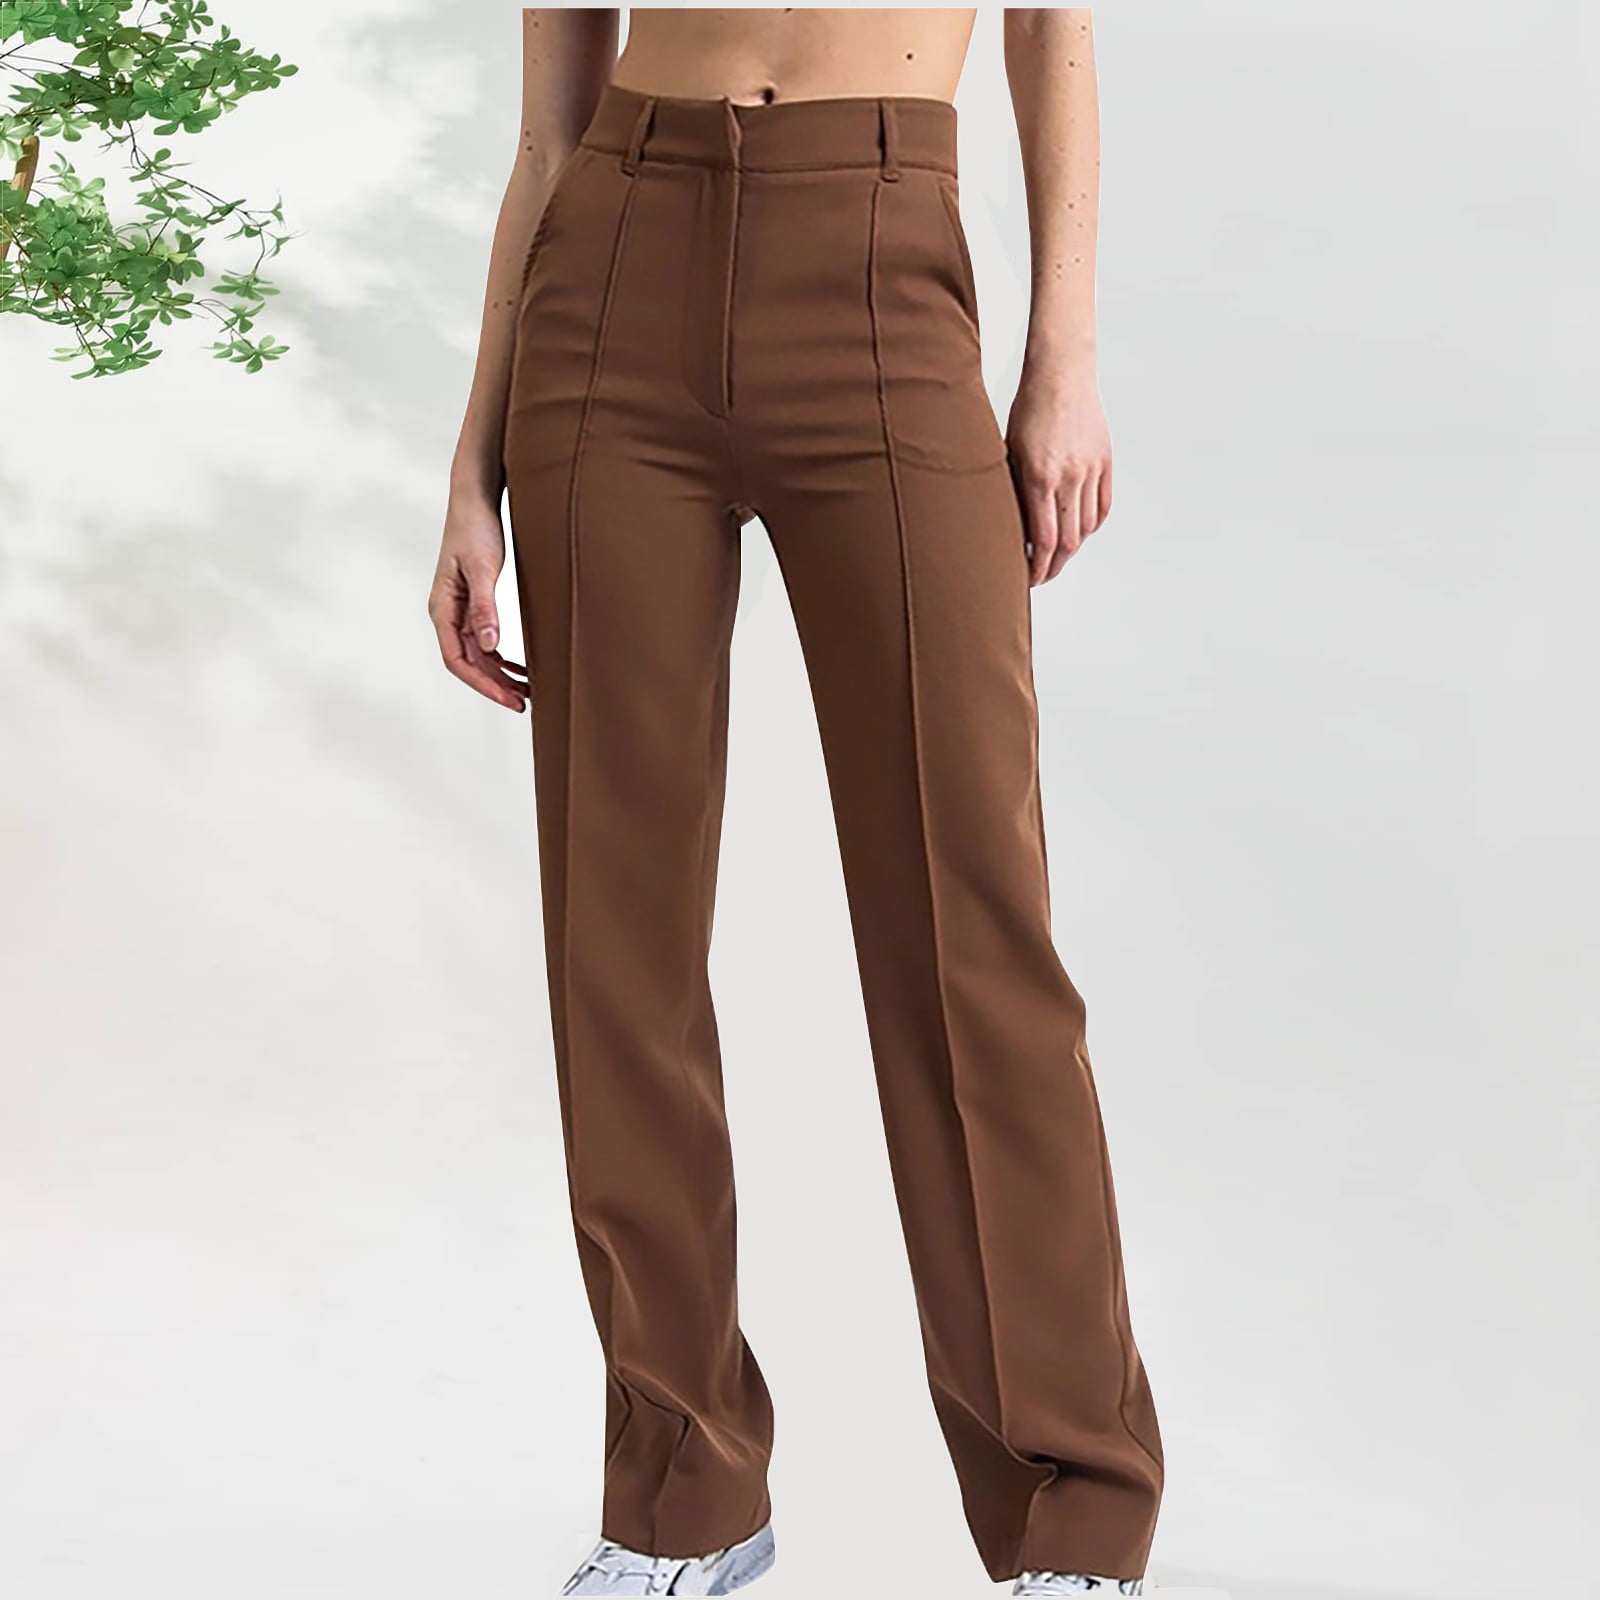 womens brown dress pants